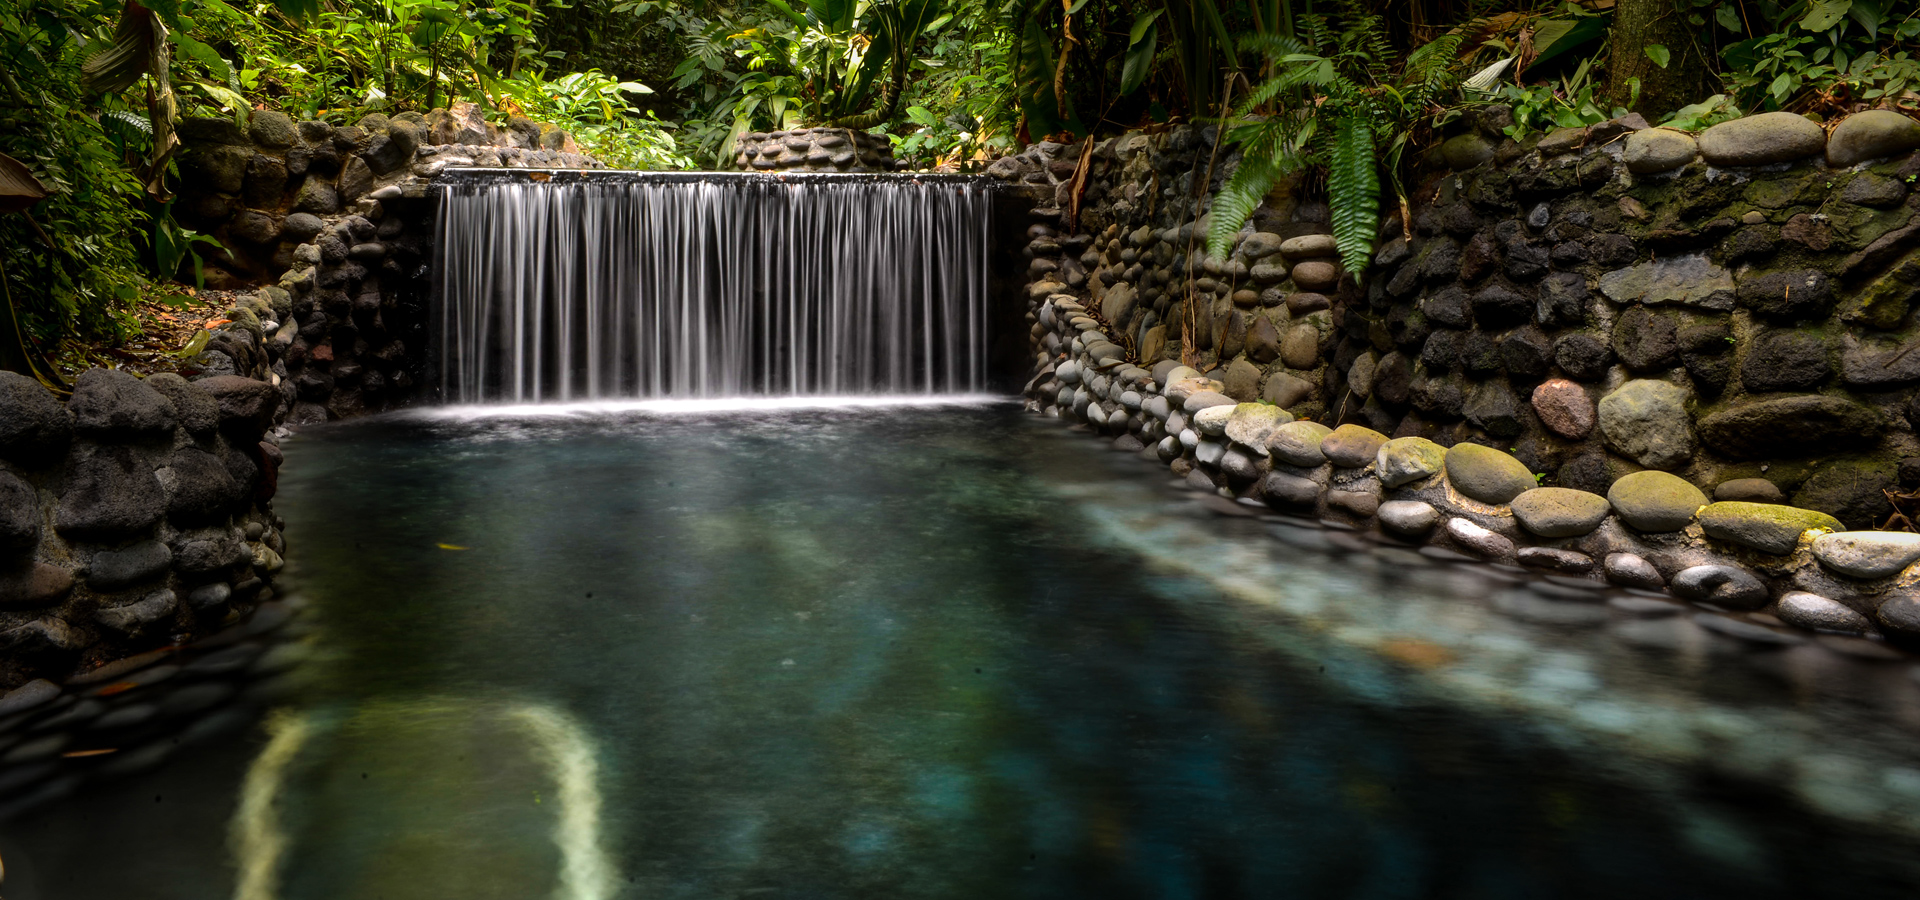 Eco Termales Hot Springs in Costa Rica